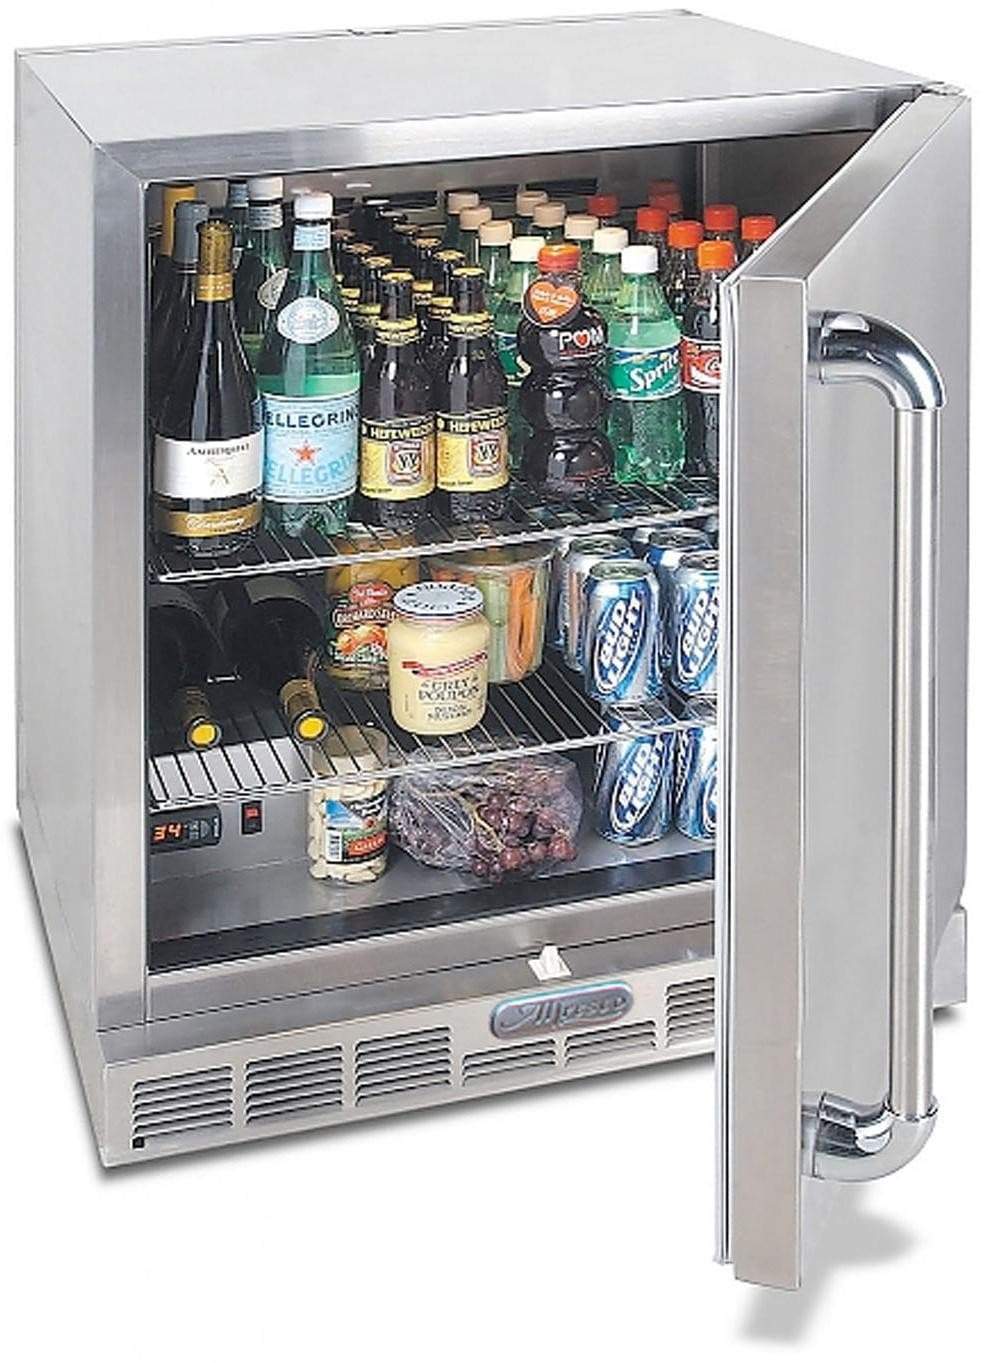 Alfresco Refrigeration + Cooling Alfresco 7.25 Cu. Ft. One Door Refrigerator URS-1XE